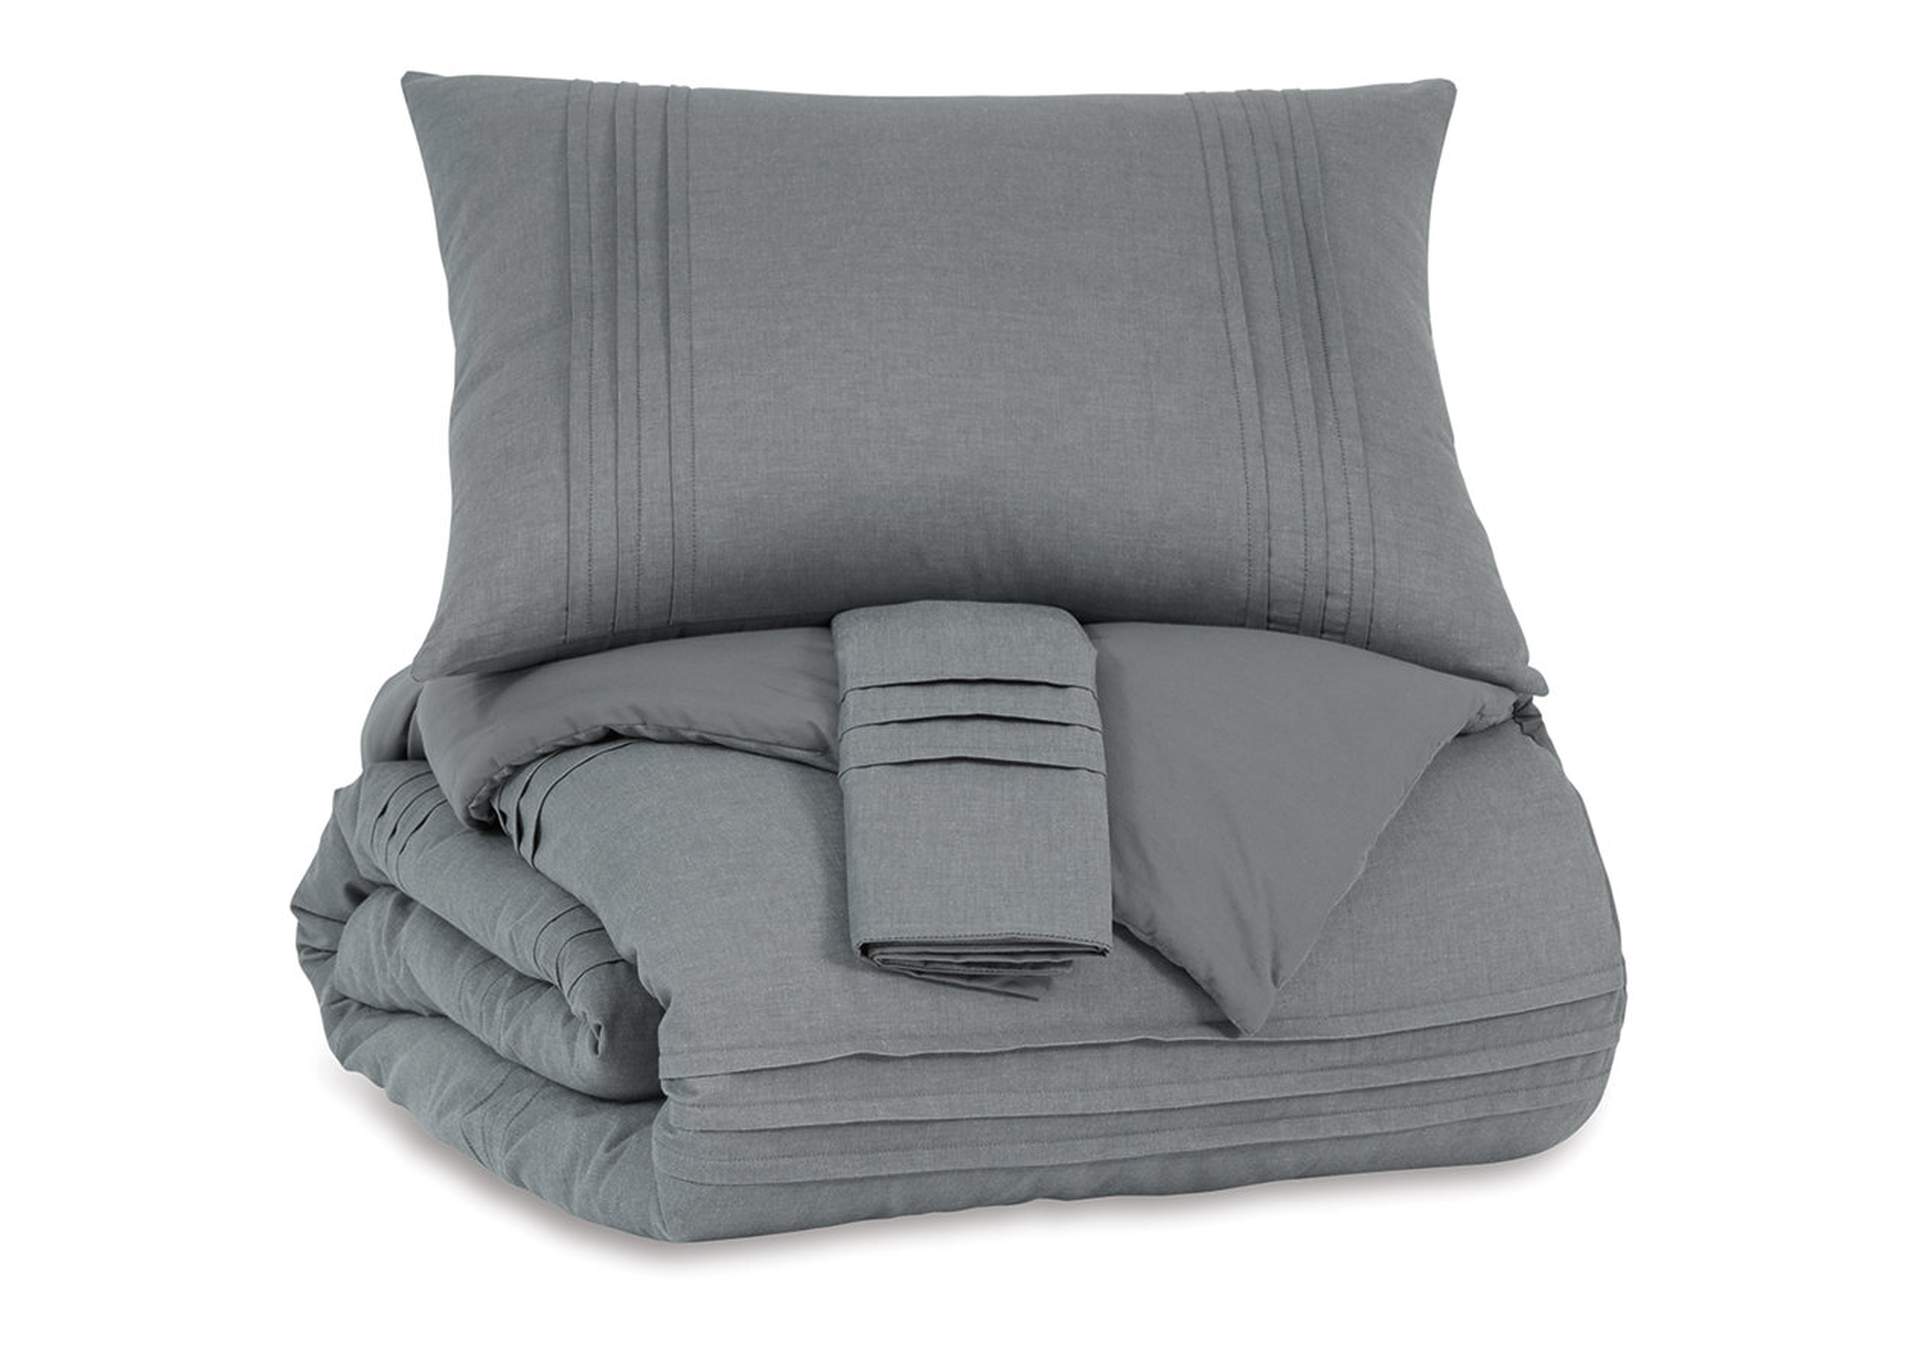 Mattias 3-Piece Queen Comforter Set,Direct To Consumer Express